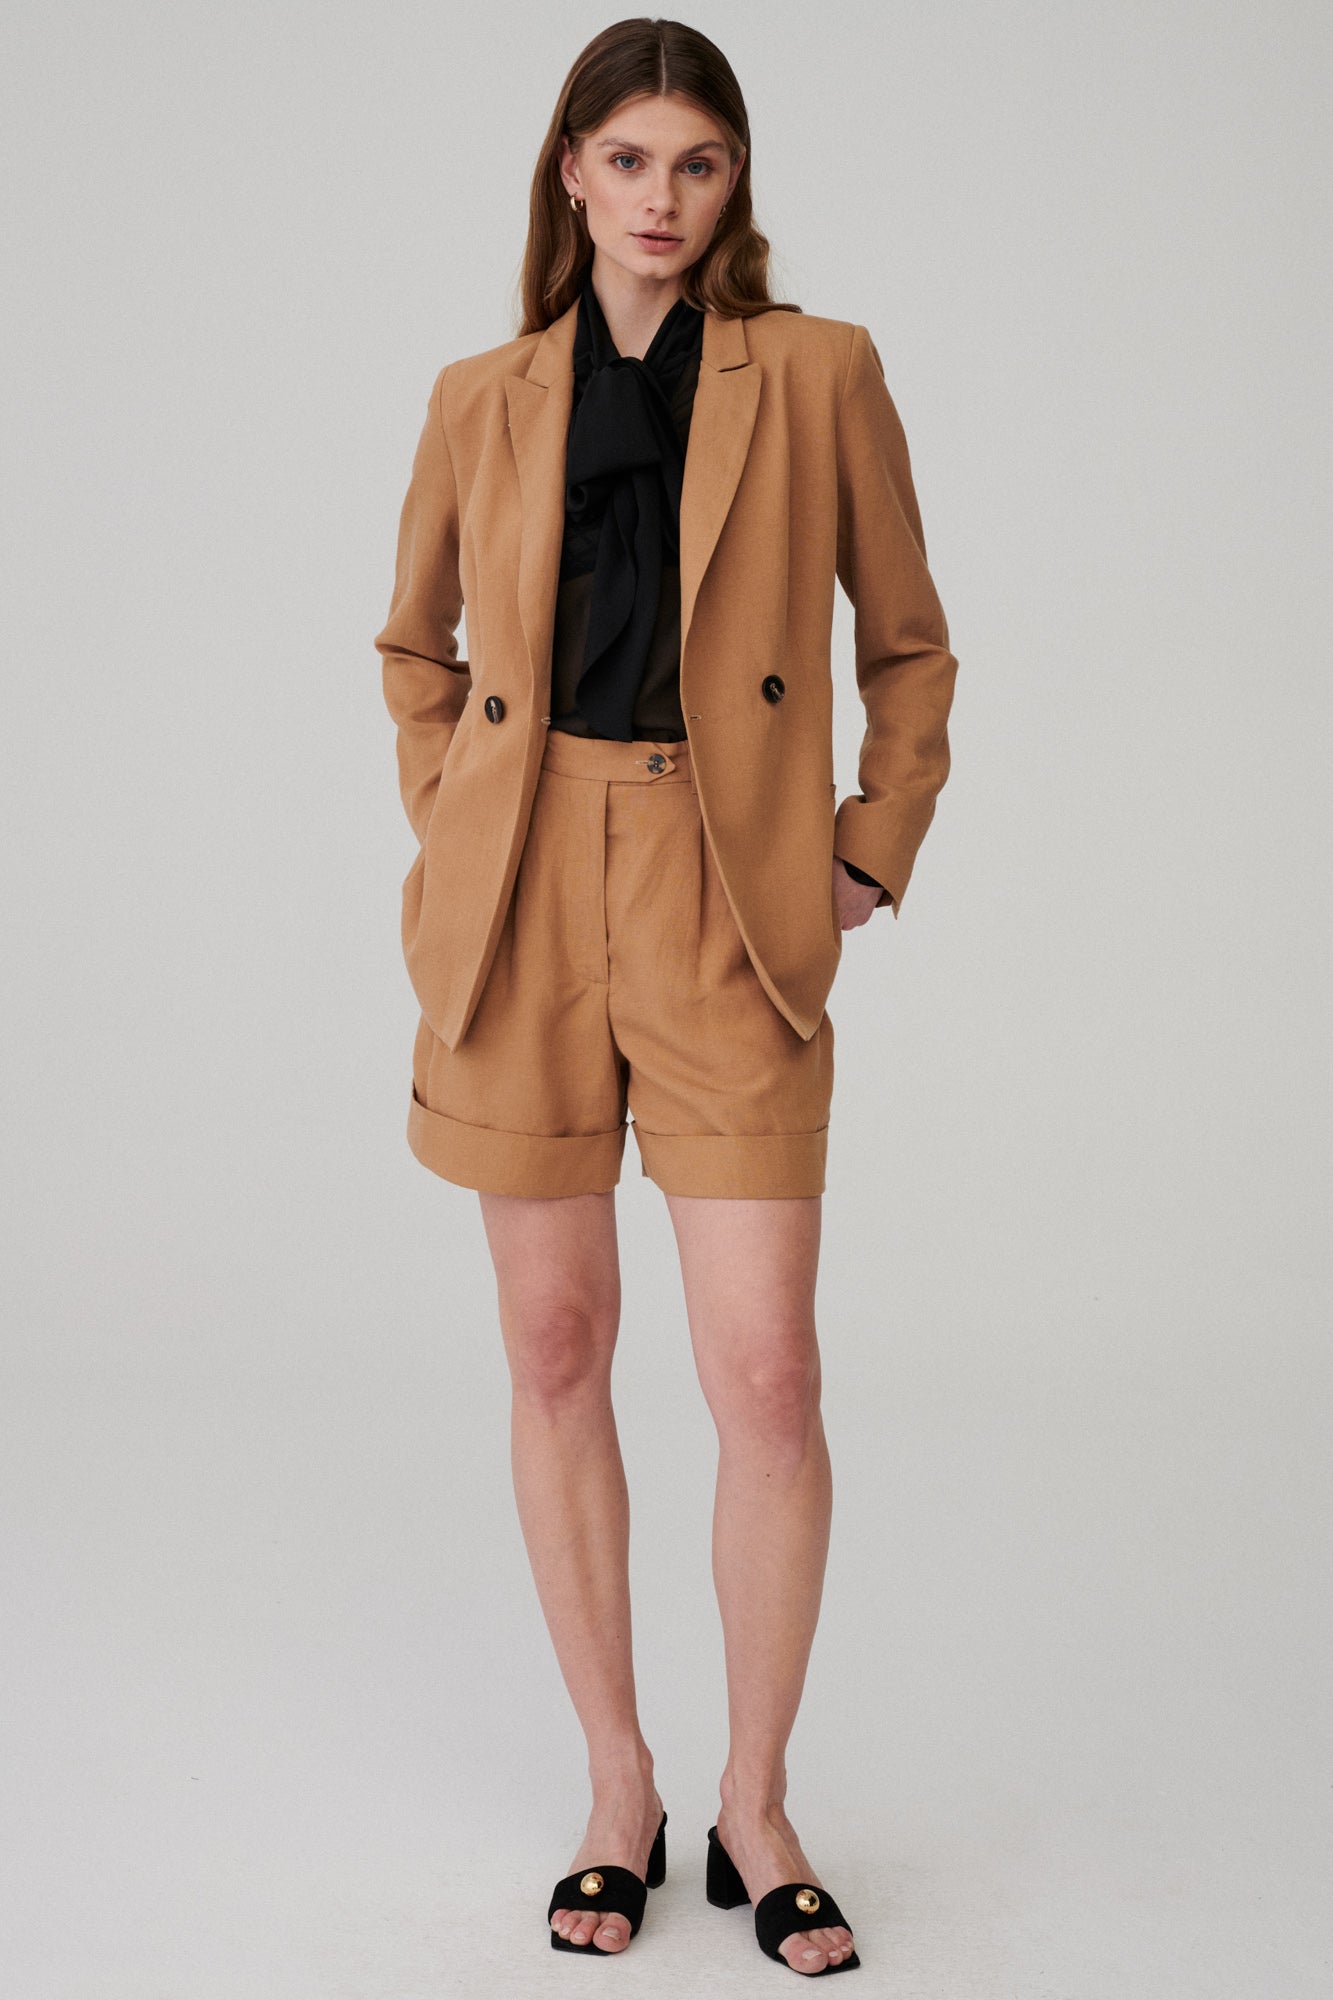 Shorts in Tencel™ & linen / 09 / 07 / savanna